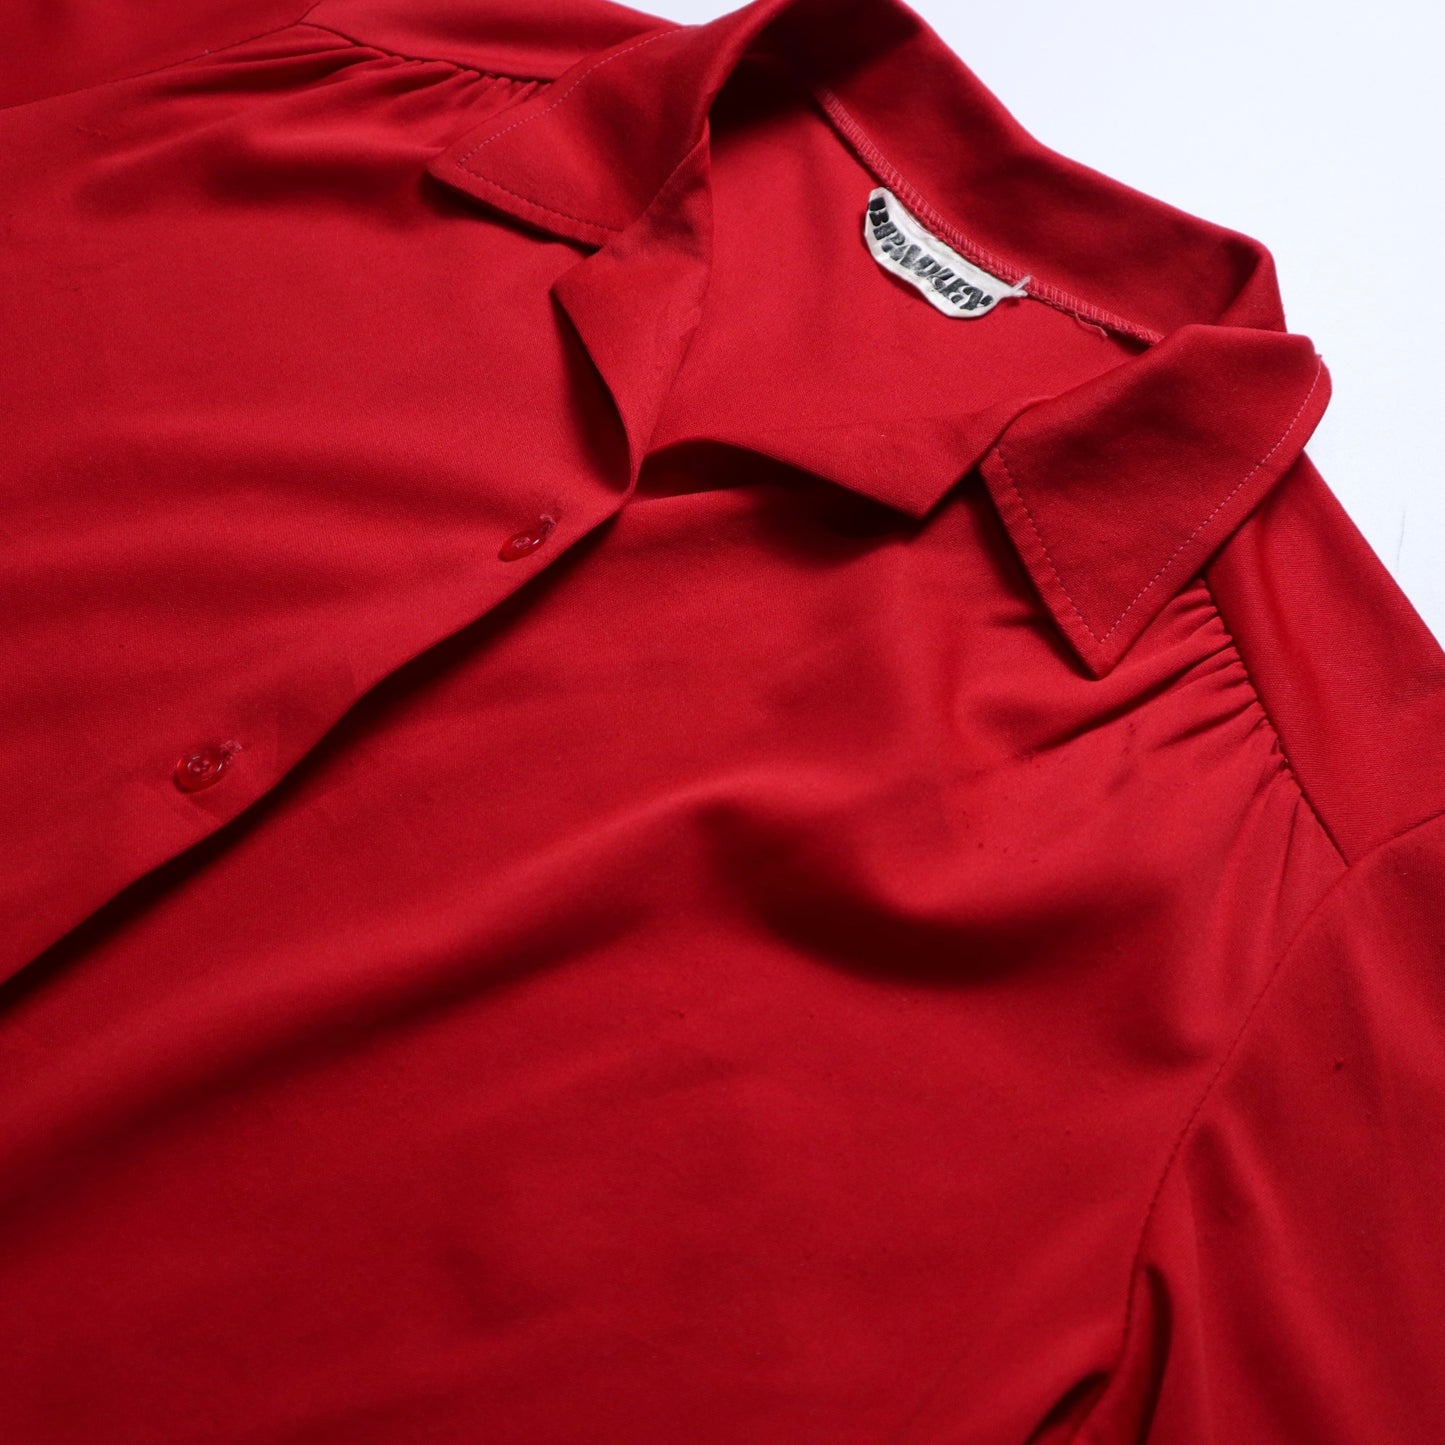 70-80s Bradley red cardigan plain shirt